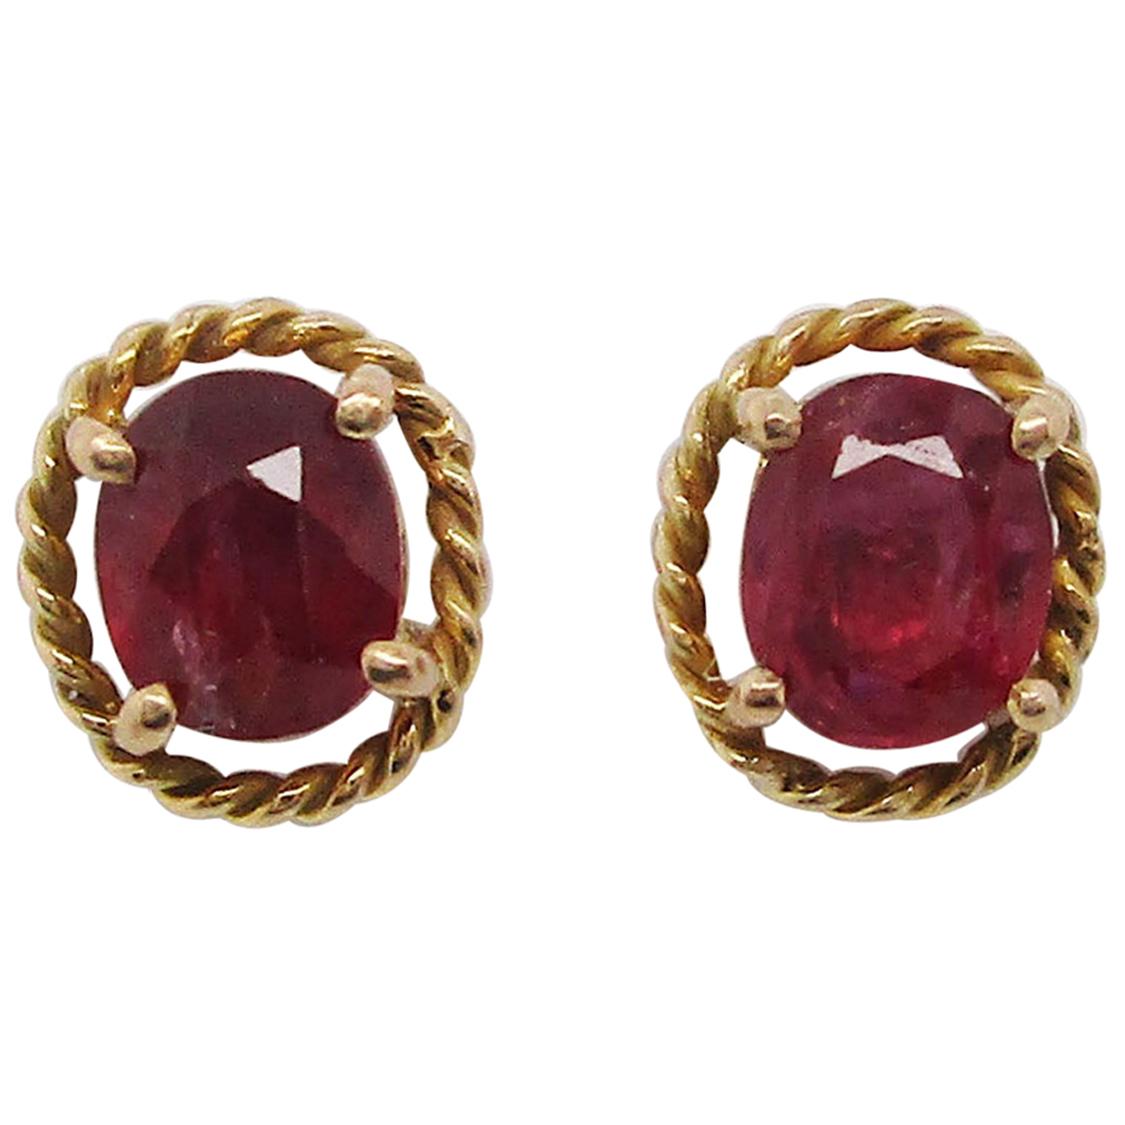 Midcentury 14 Karat Yellow Gold Ruby Stud Earrings